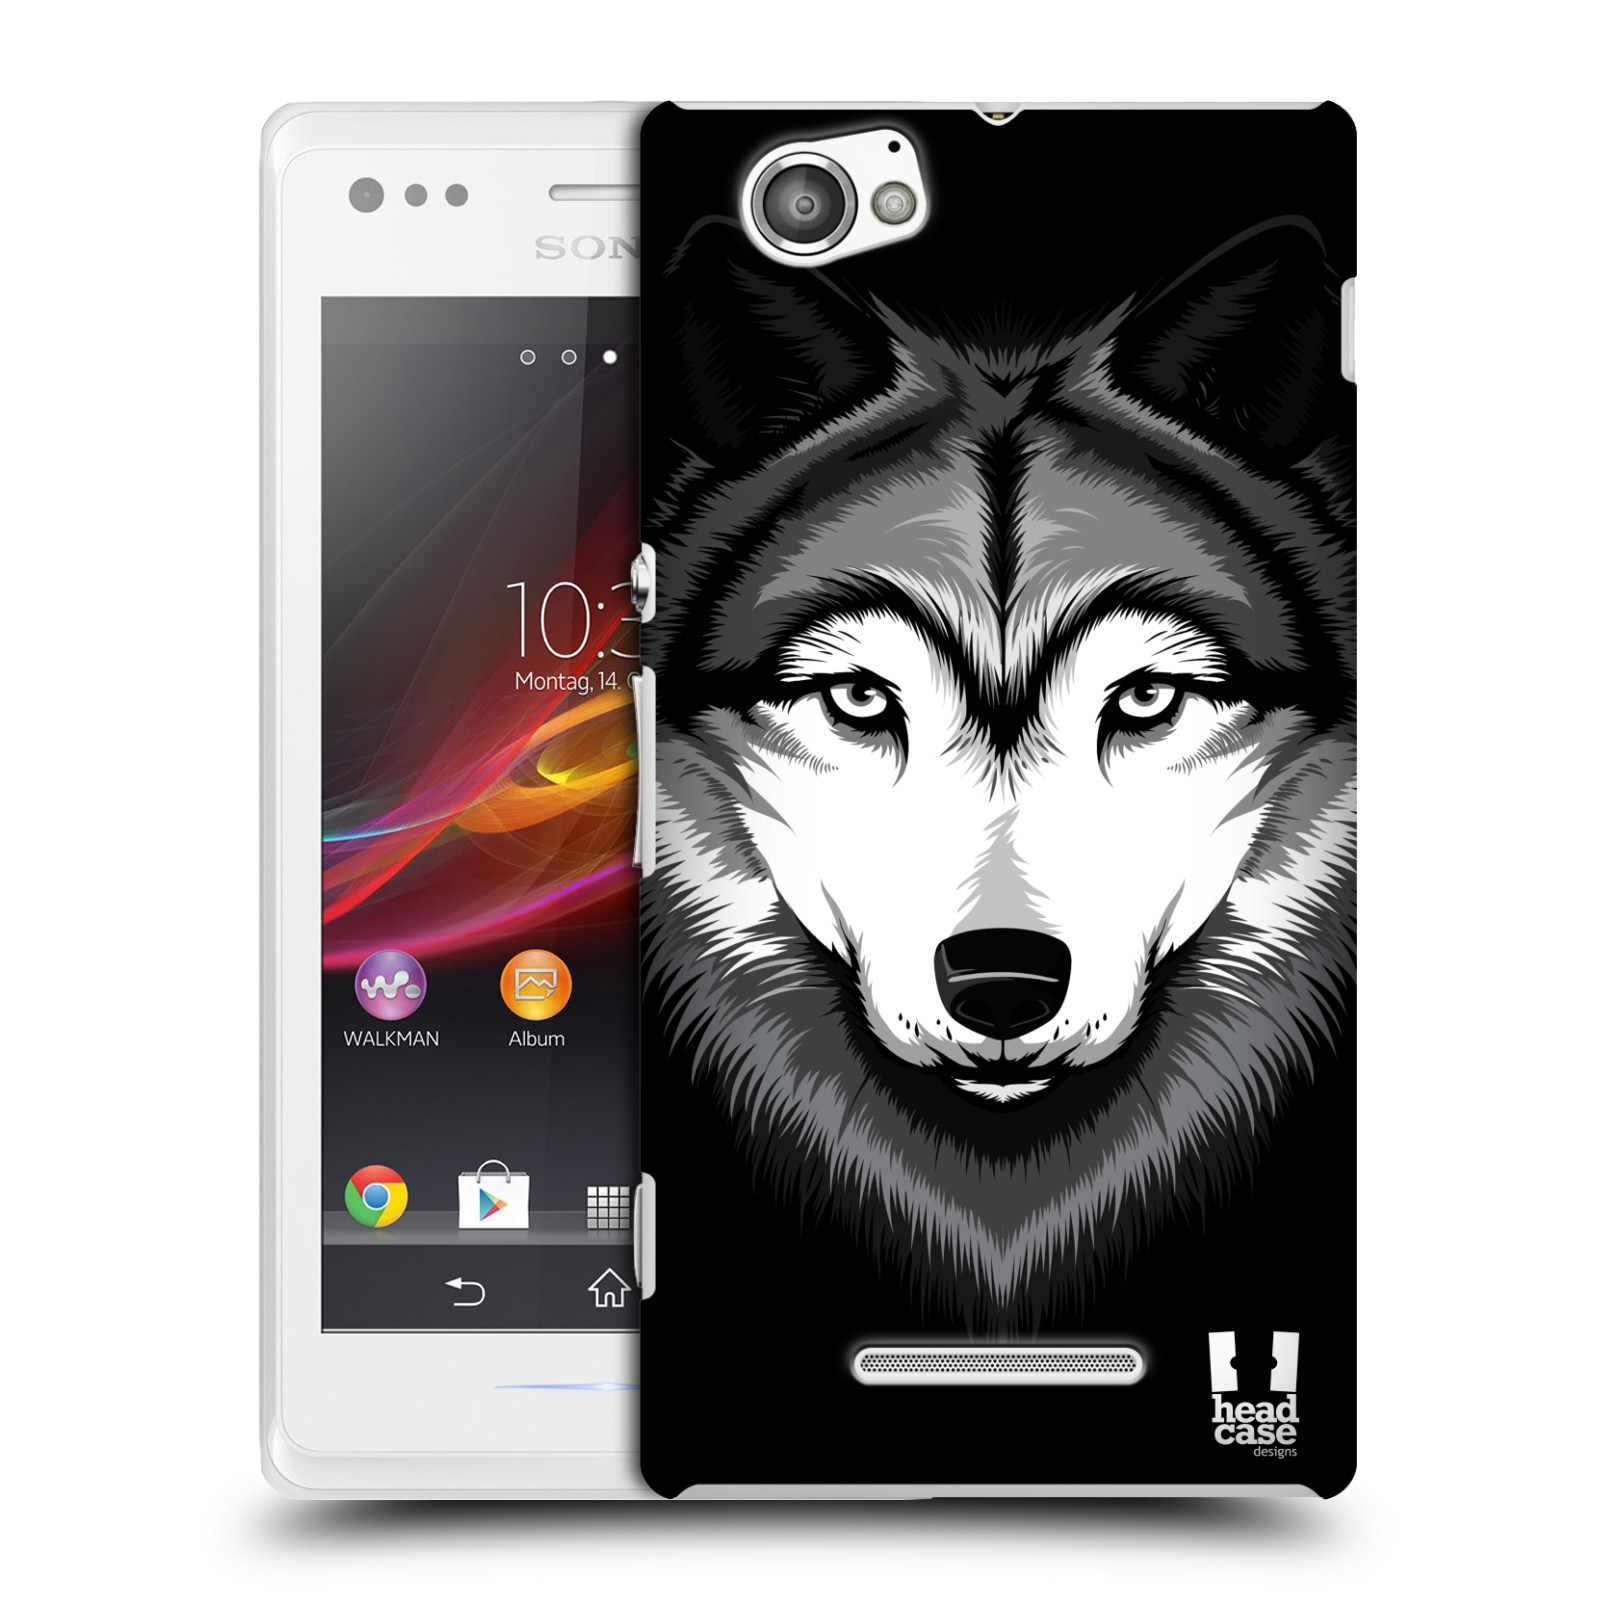 HEAD CASE plastový obal na mobil Sony Xperia M vzor Zvíře kreslená tvář 2 vlk